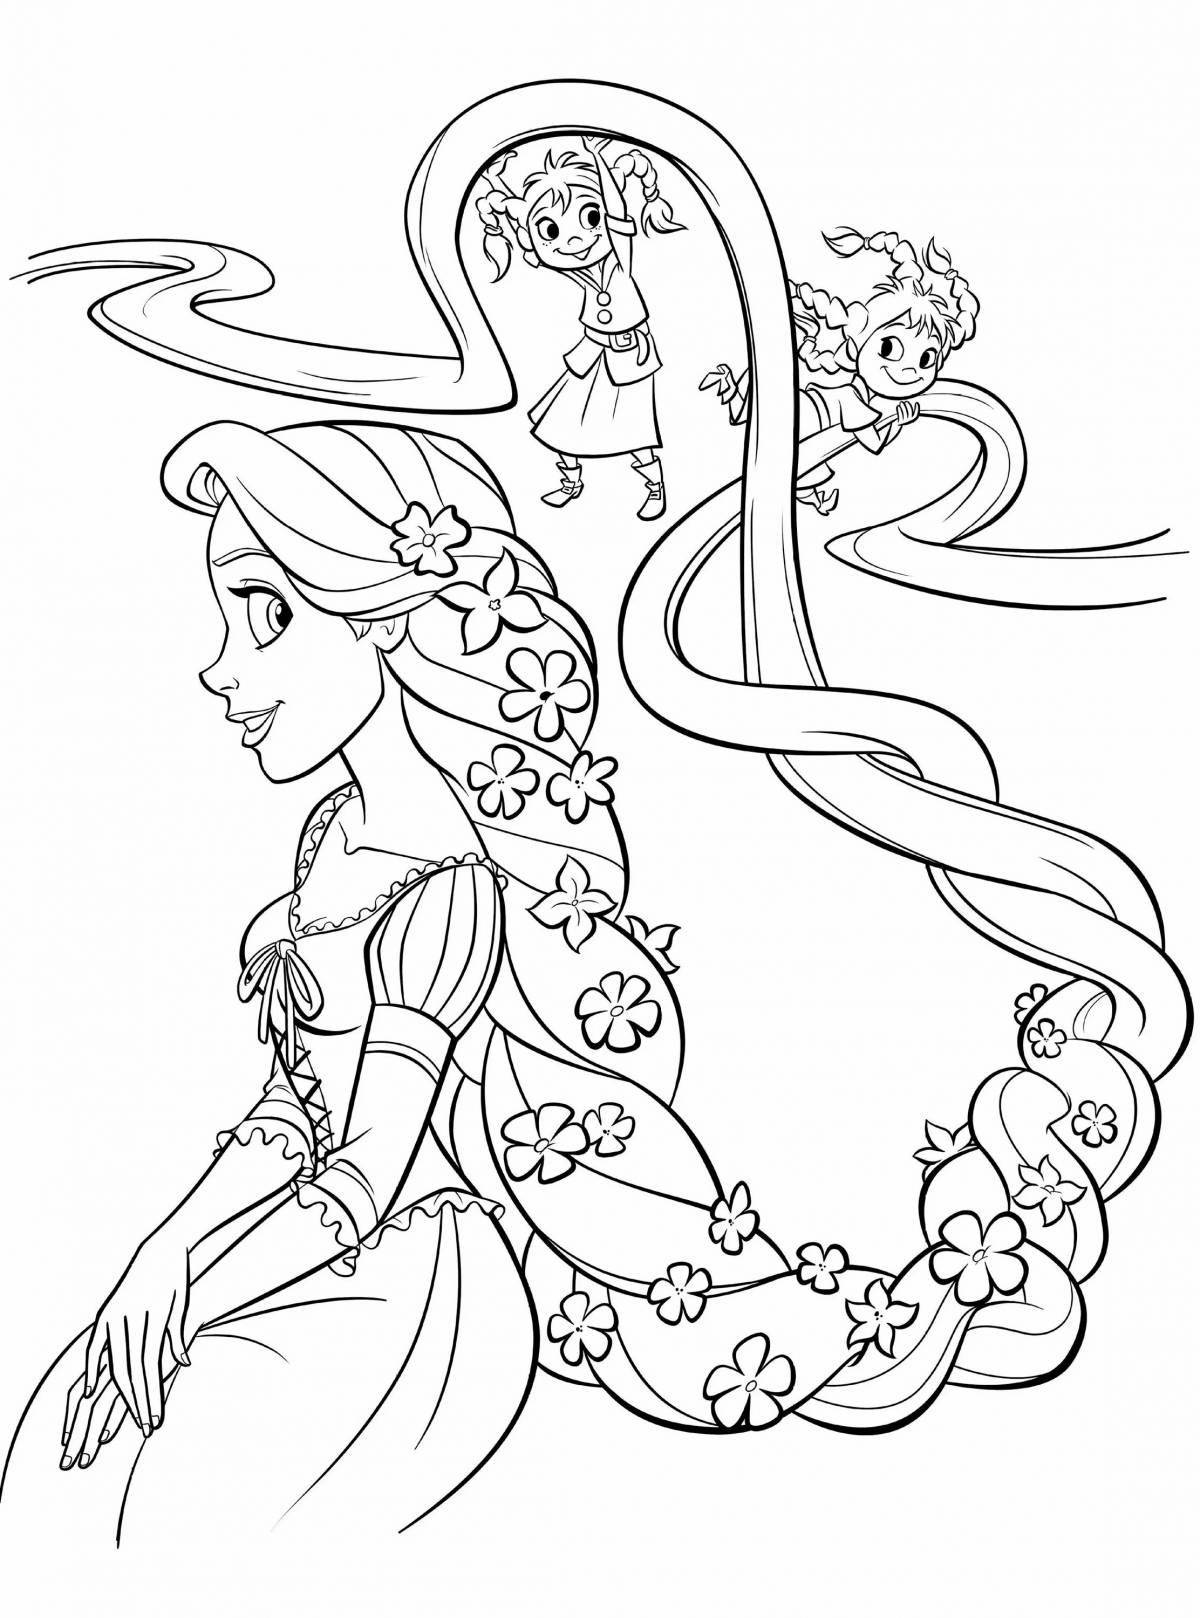 Coloring page beautiful princess